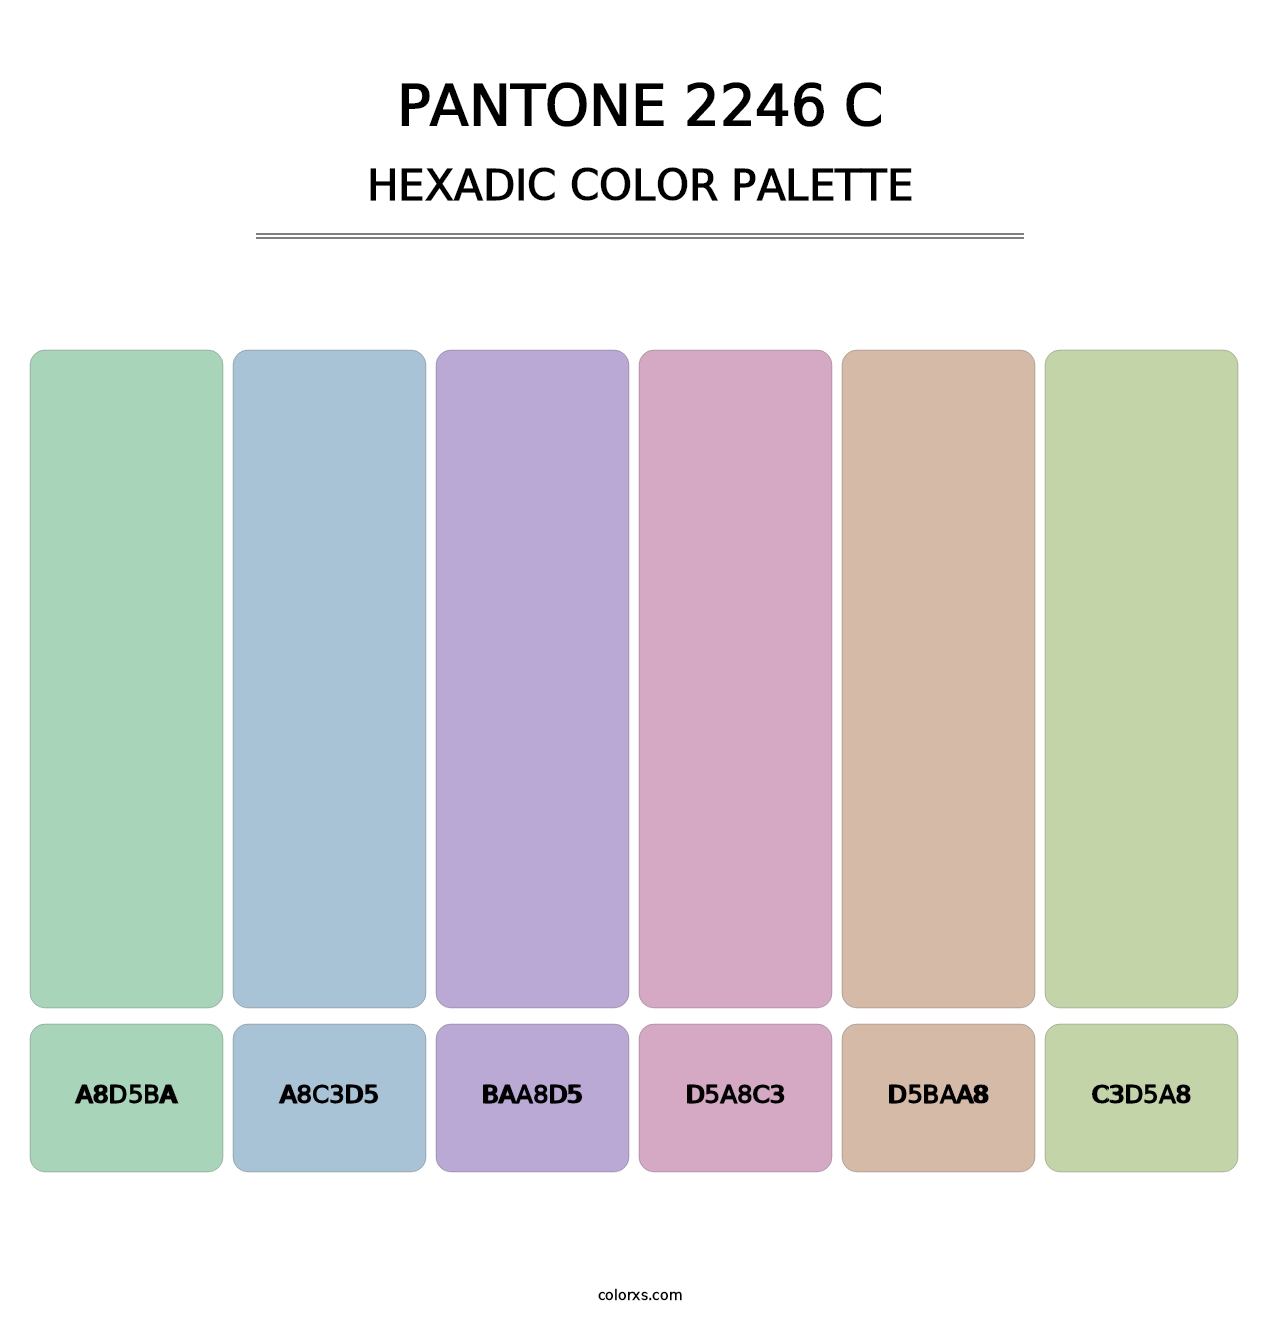 PANTONE 2246 C - Hexadic Color Palette